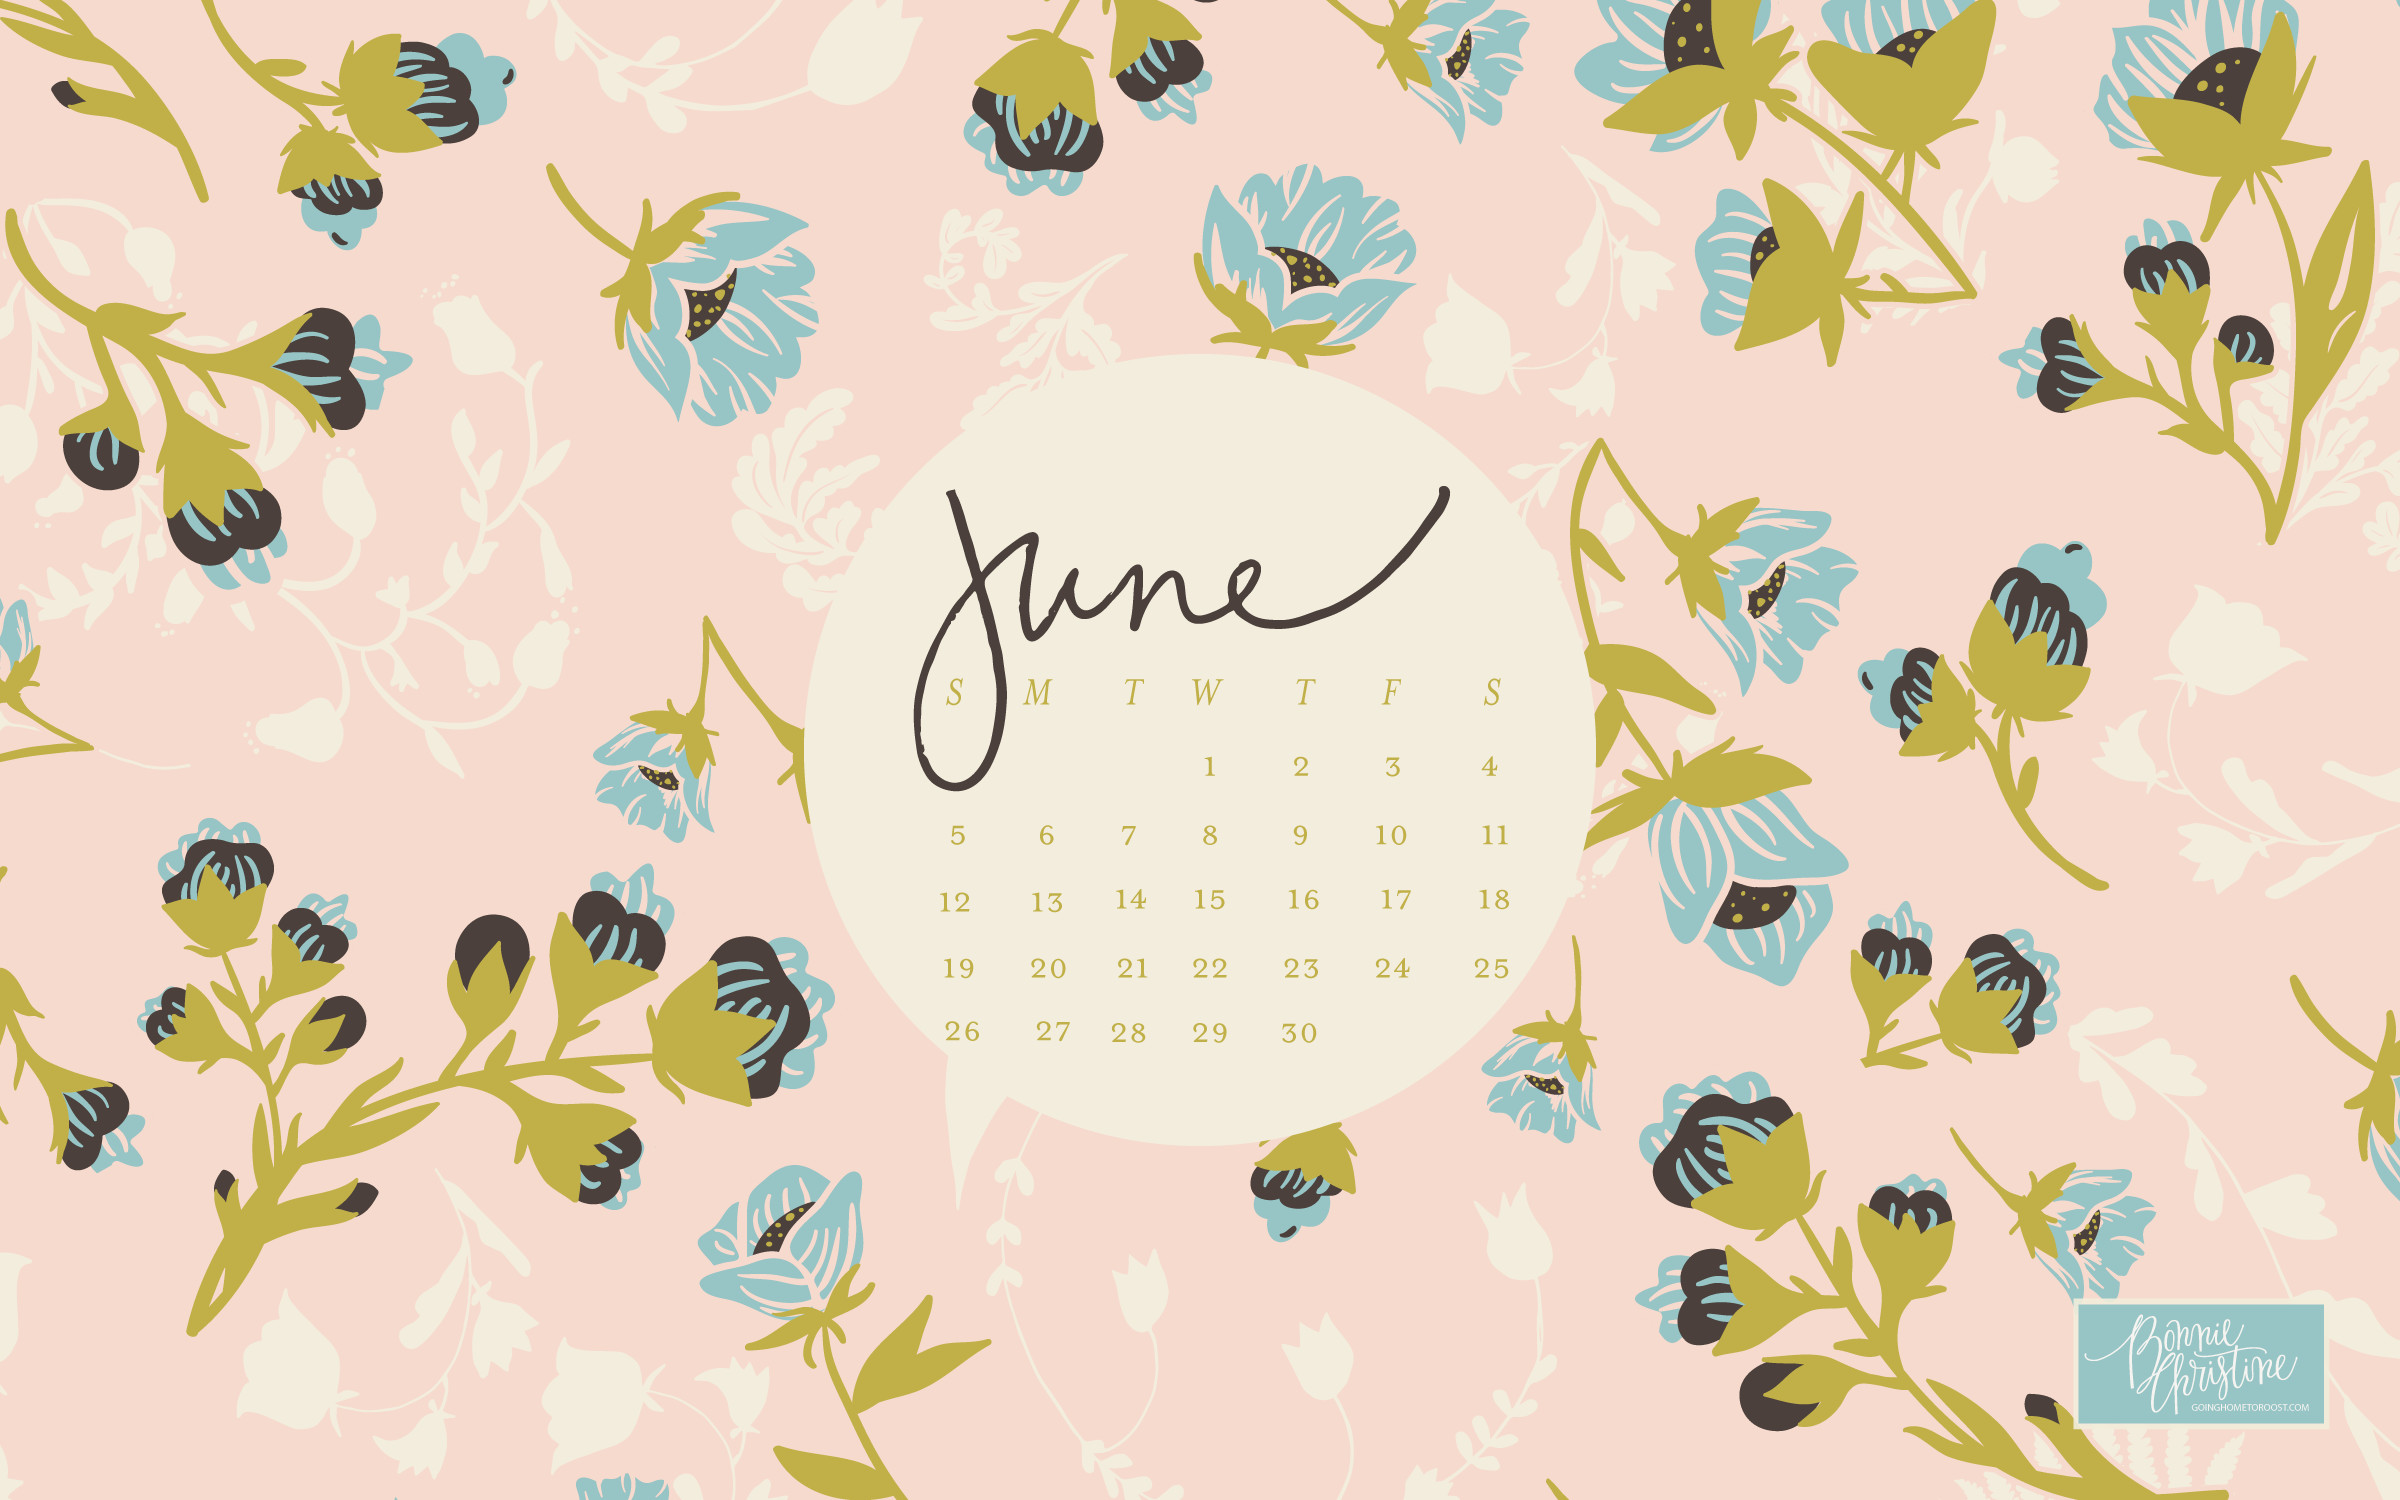 2400x1500 Floral Desktop Backgrounds for June by Bonnie Christine (3)